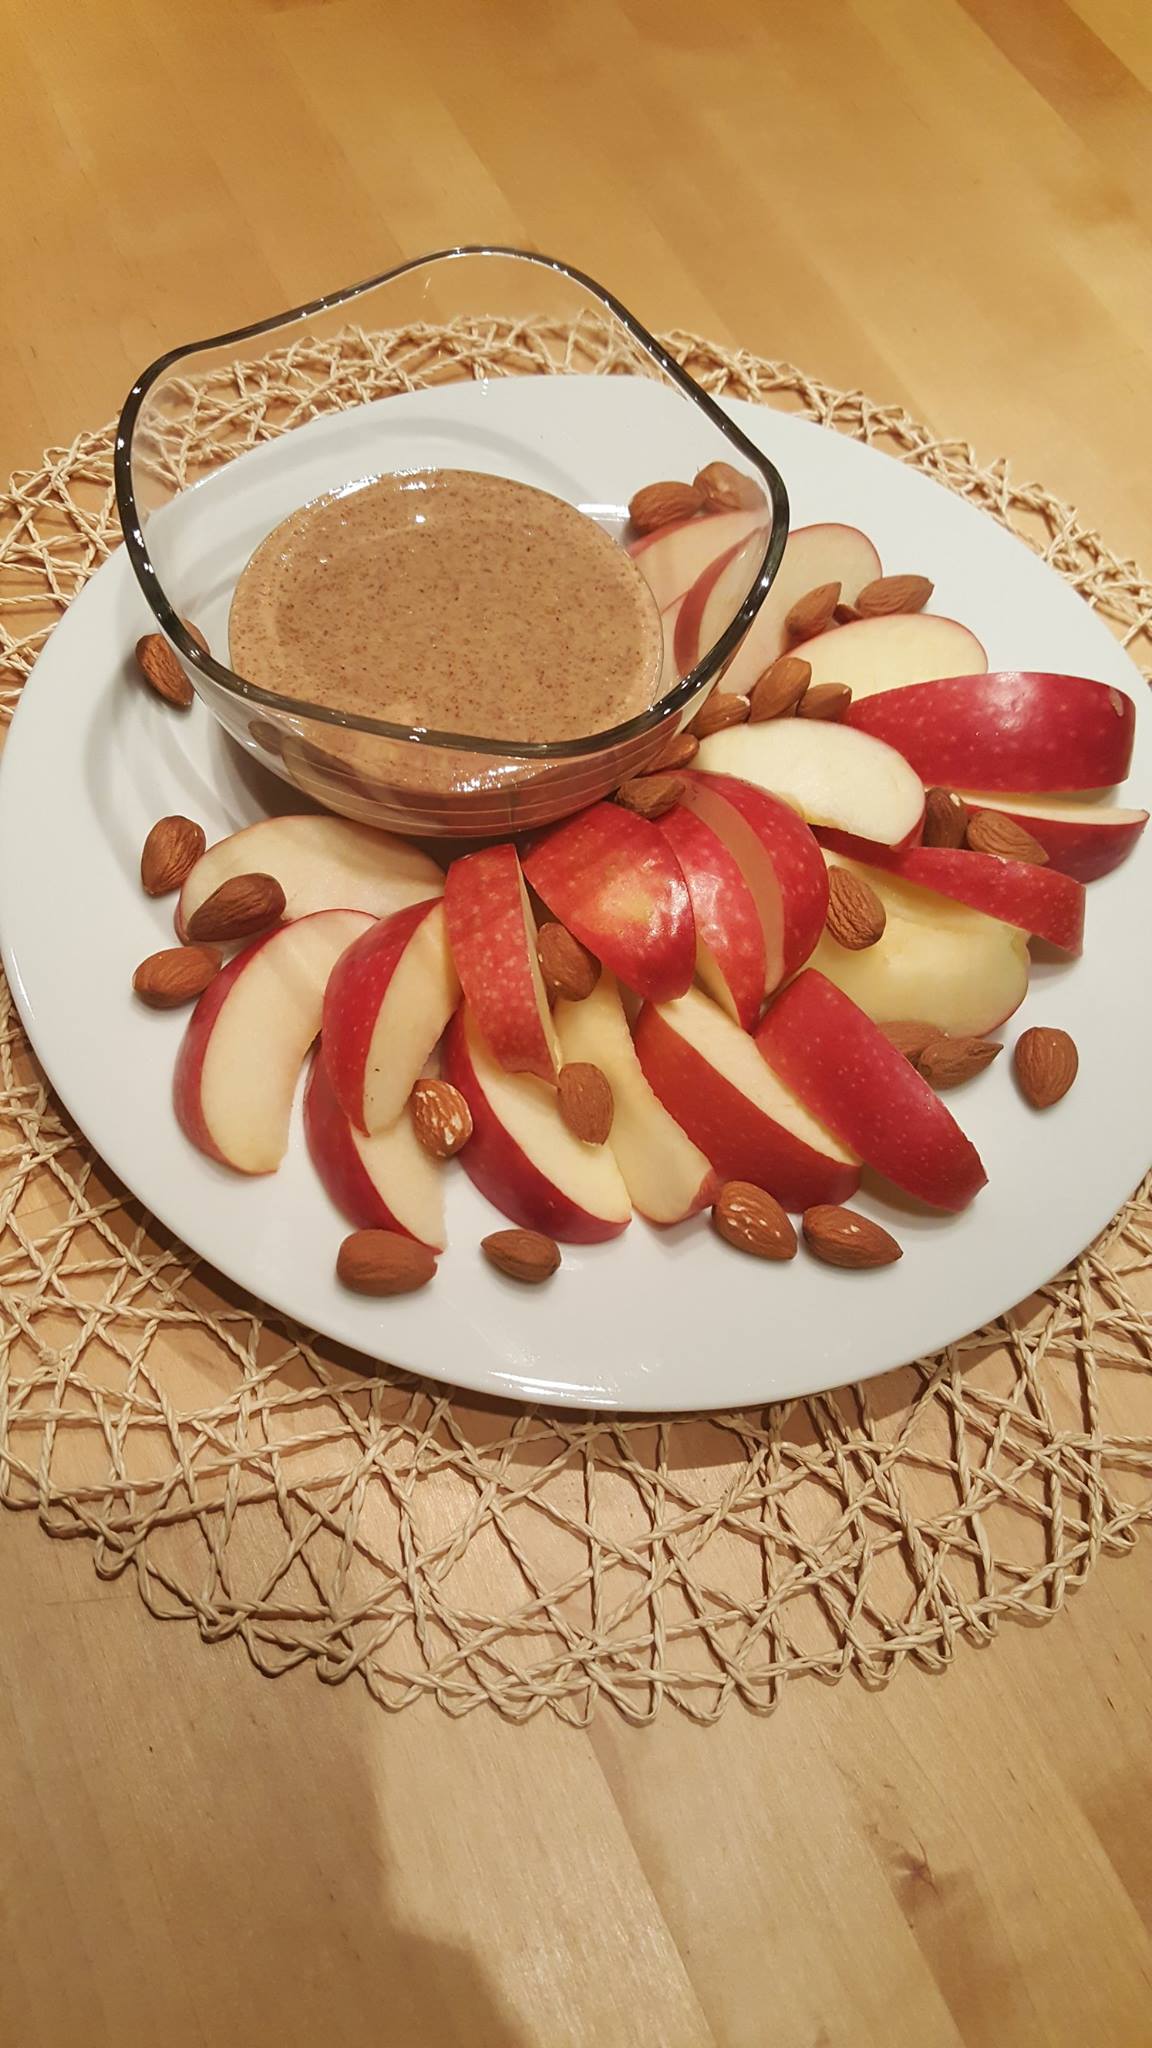 Body Detox Diet. Apple and almond nuts snack. https://www.wocdetox.com/body-detox-diet.html